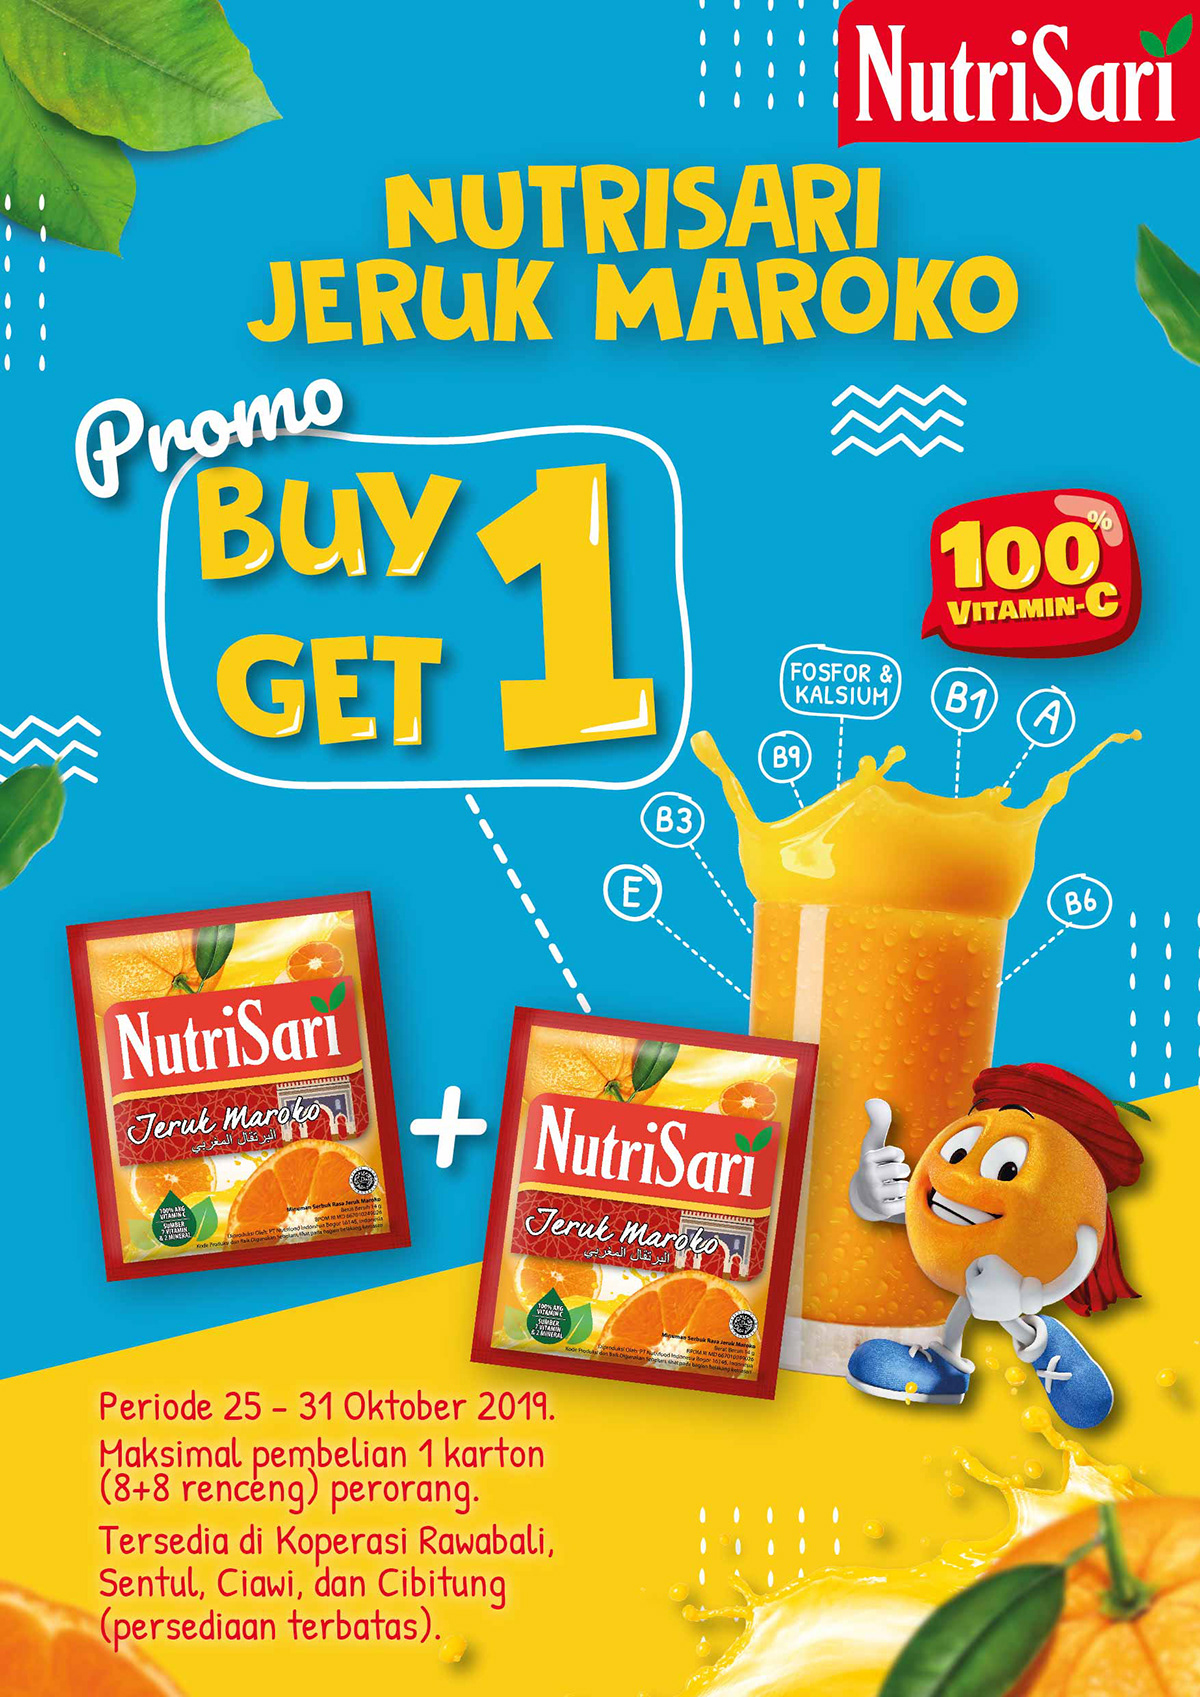 branding  Advertising  NutriSari yellow blue new Launching variant orange juice